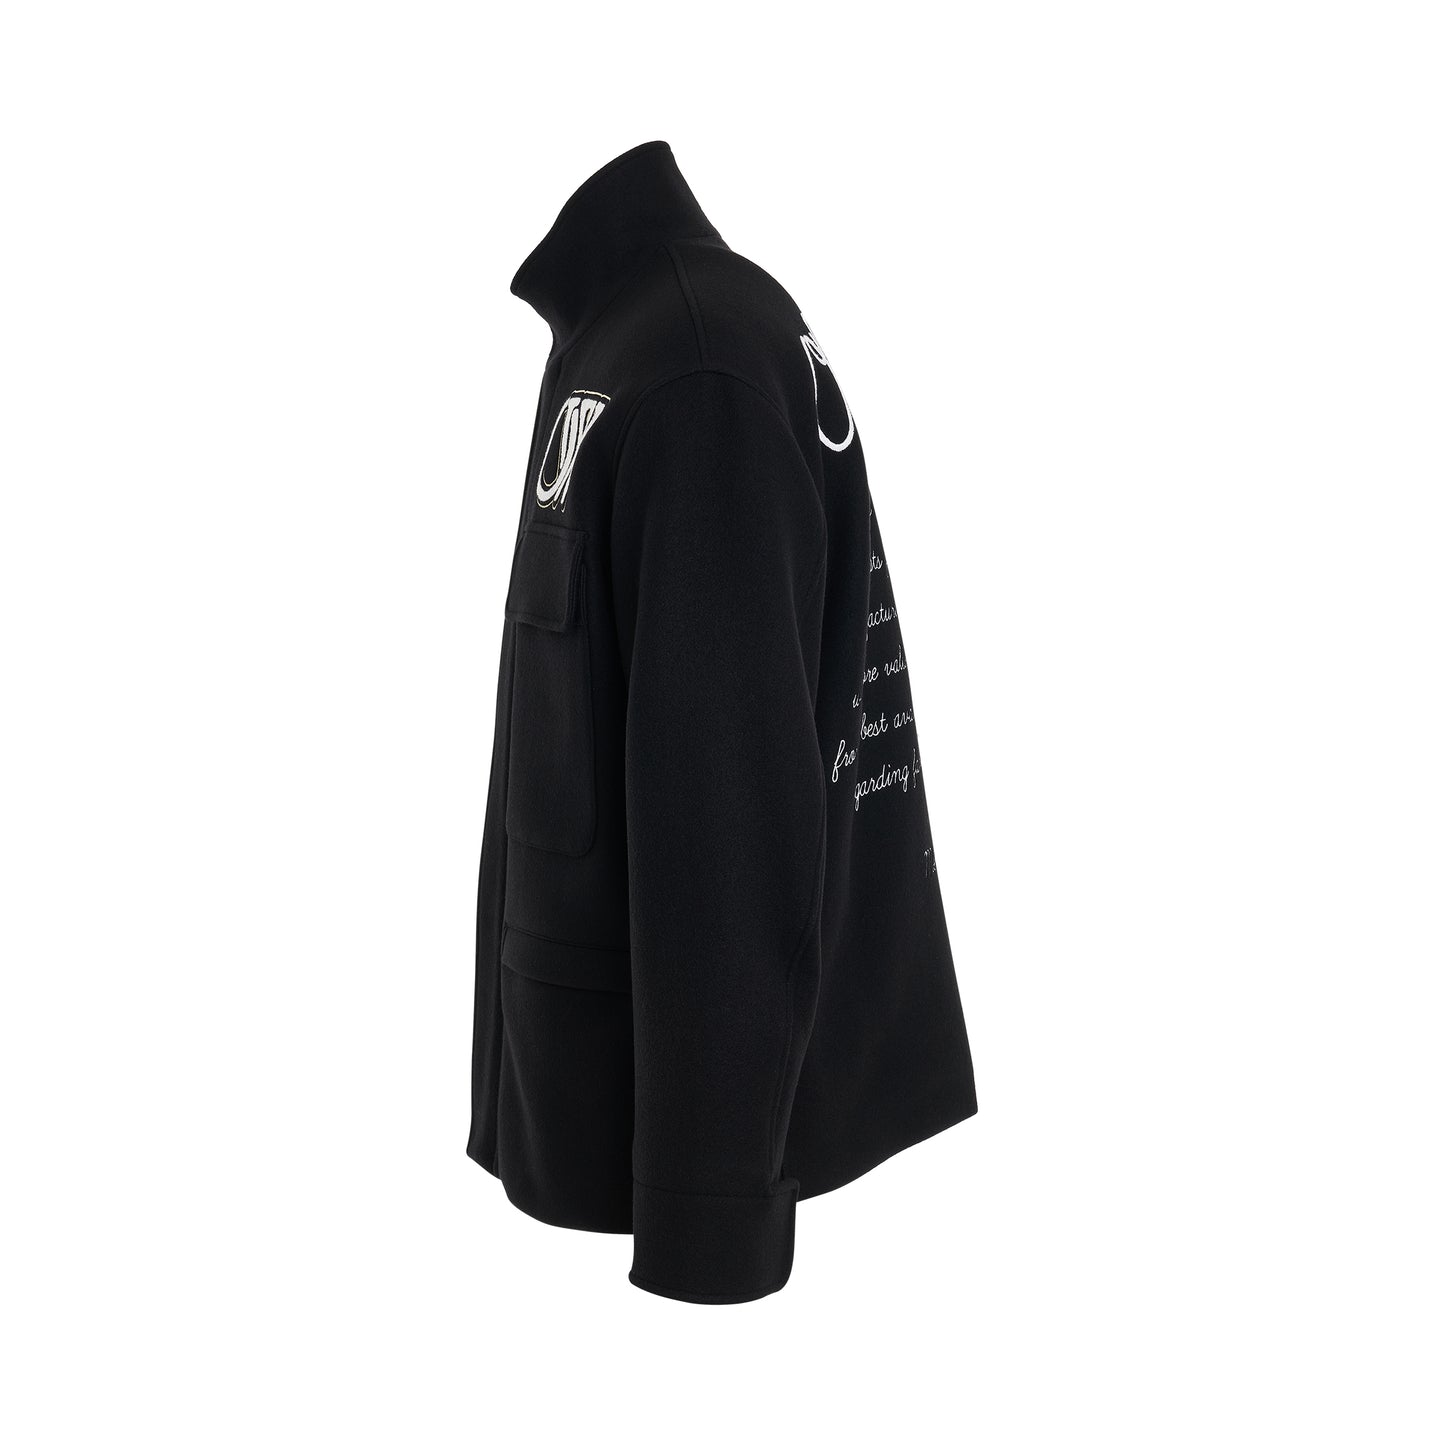 Wool Varsity Field Jacket in Black/White